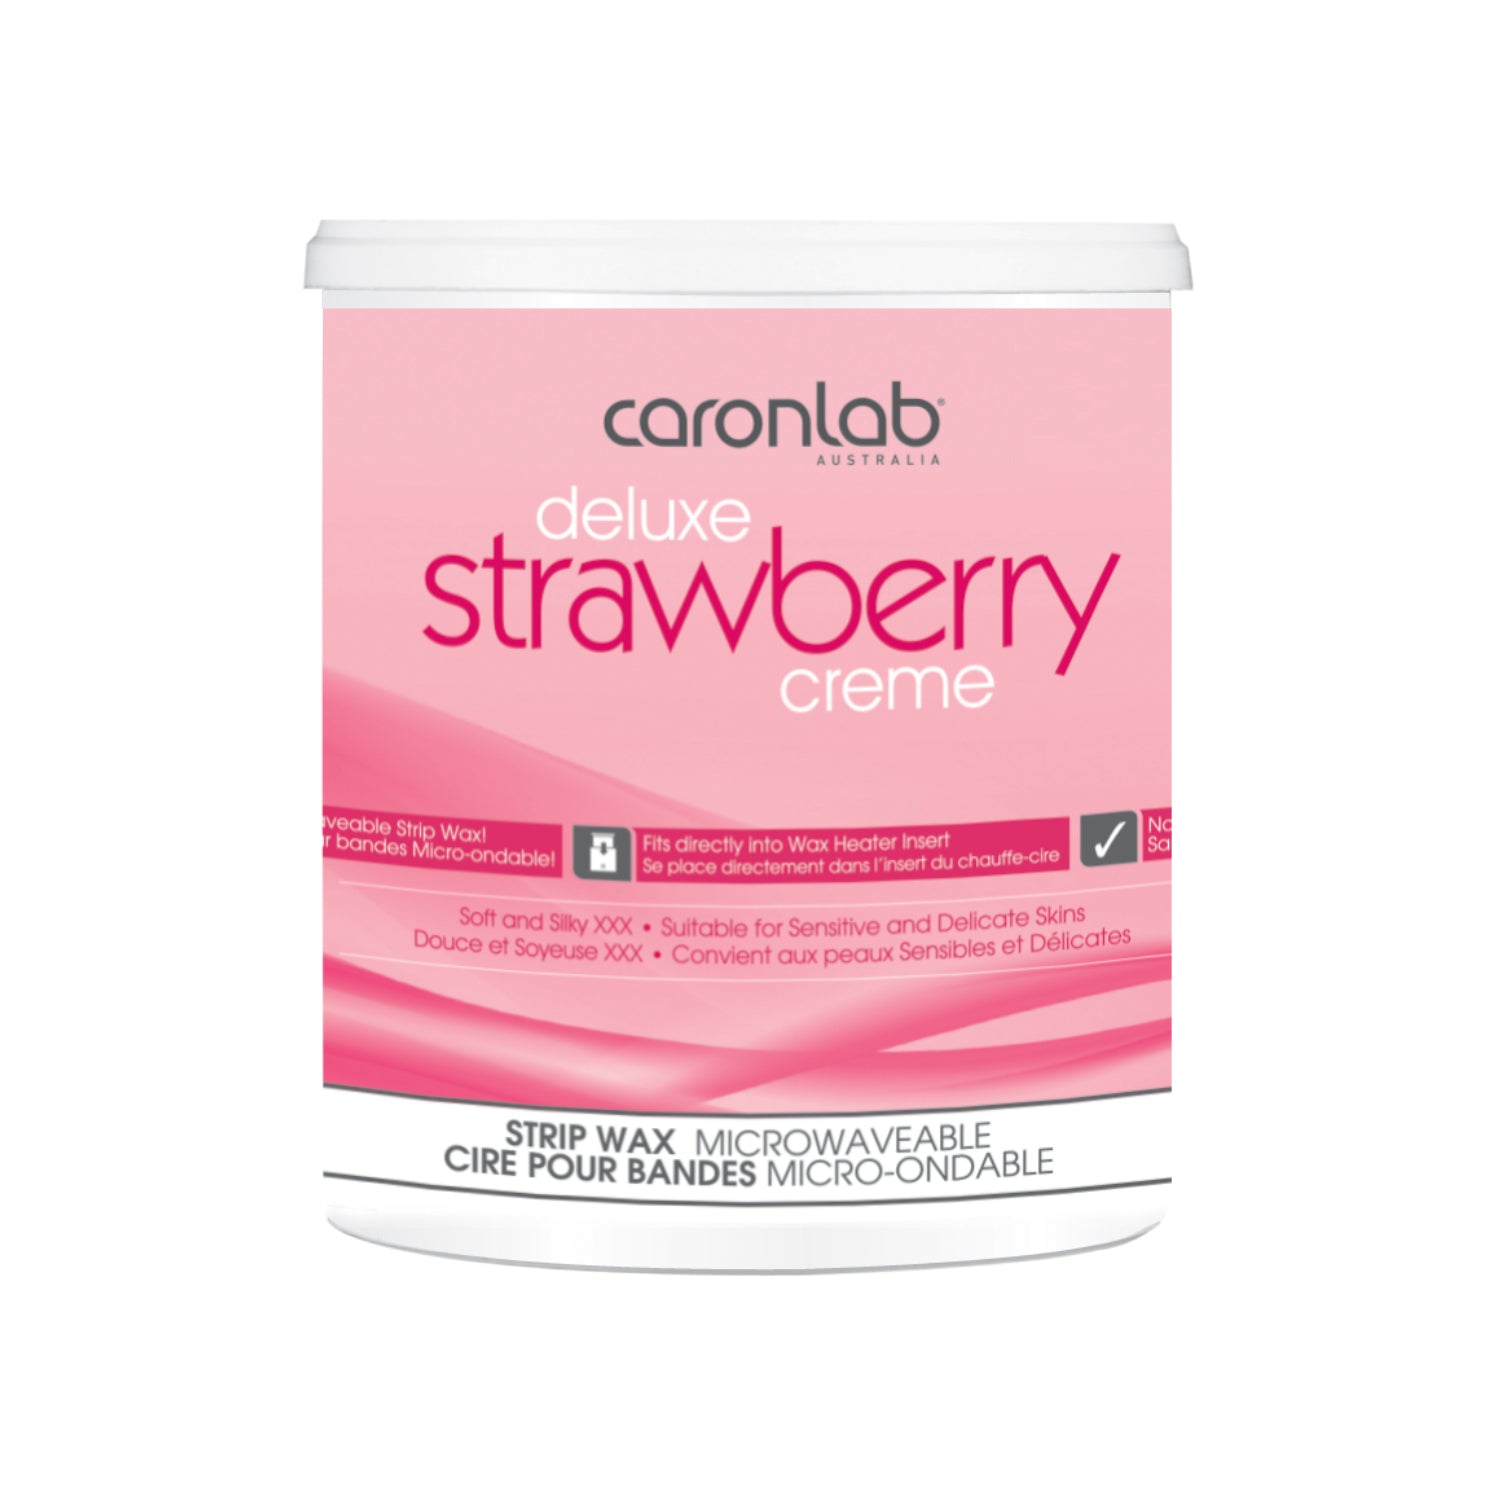 Caronlab - Strawberry Creme Strip Wax Microwaveable - Creata Beauty - Professional Beauty Products